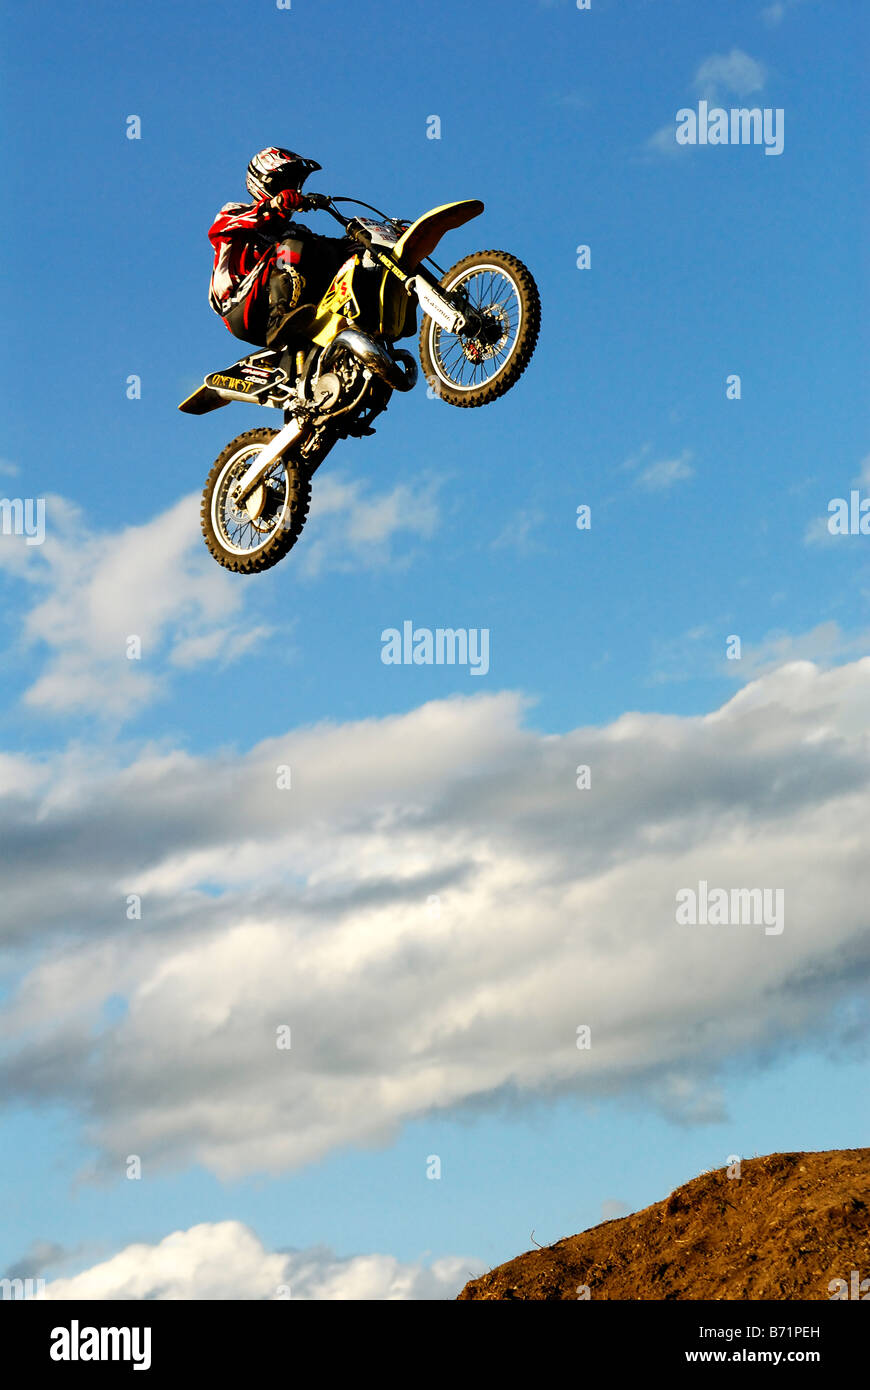 Motocross rider 0810 Stock Photo